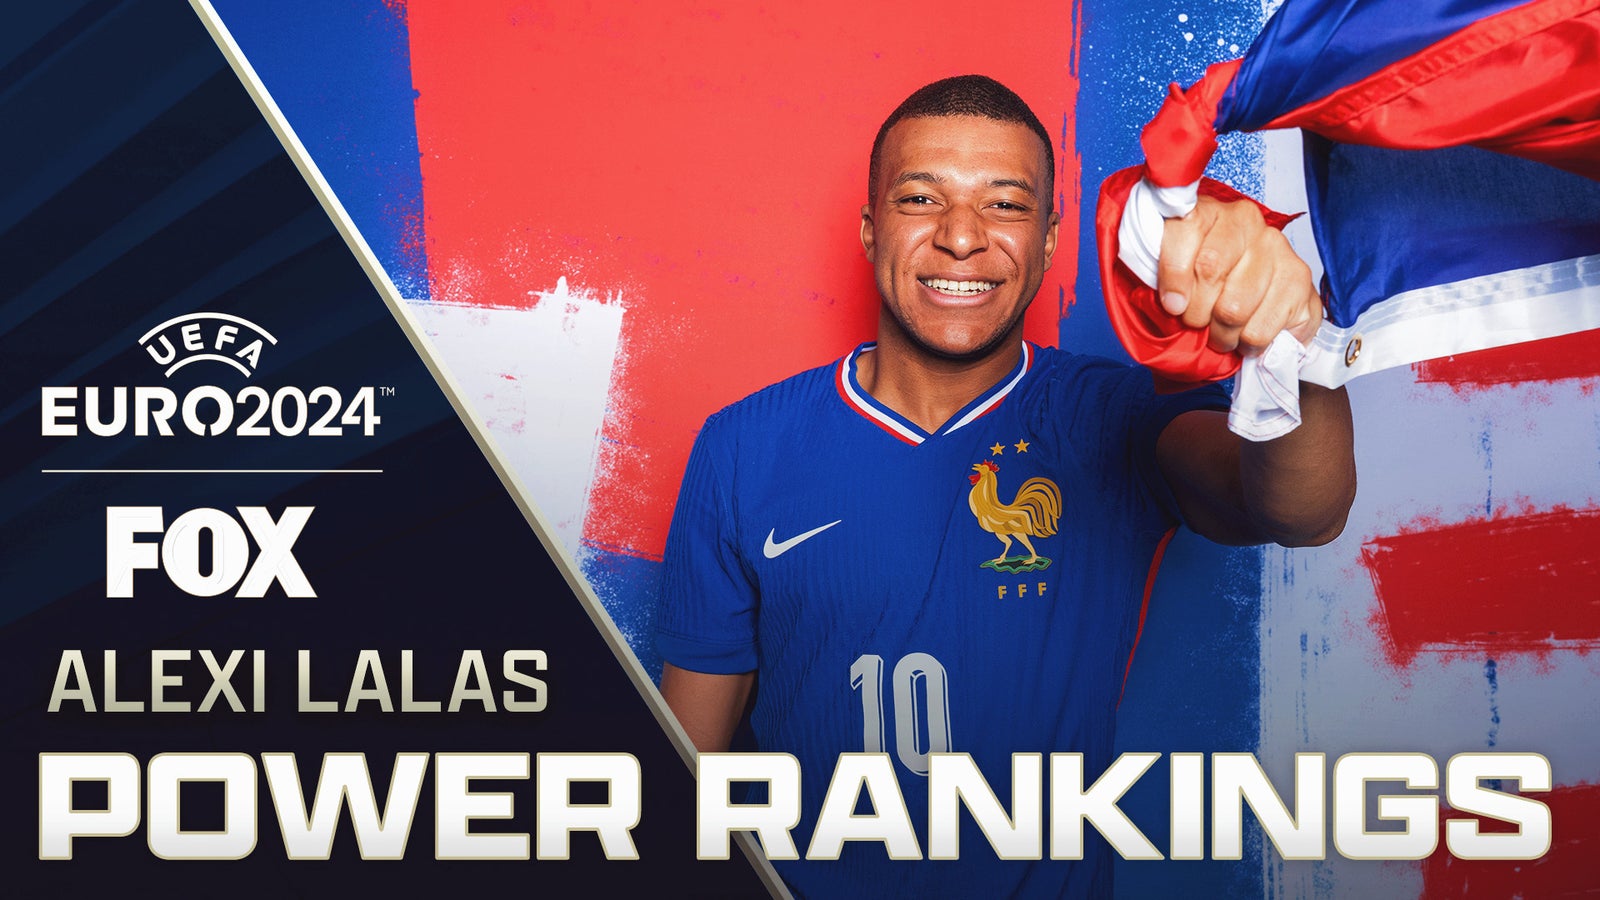 Alexi Lalas' Top 10 Power Rankings for Euro 2024